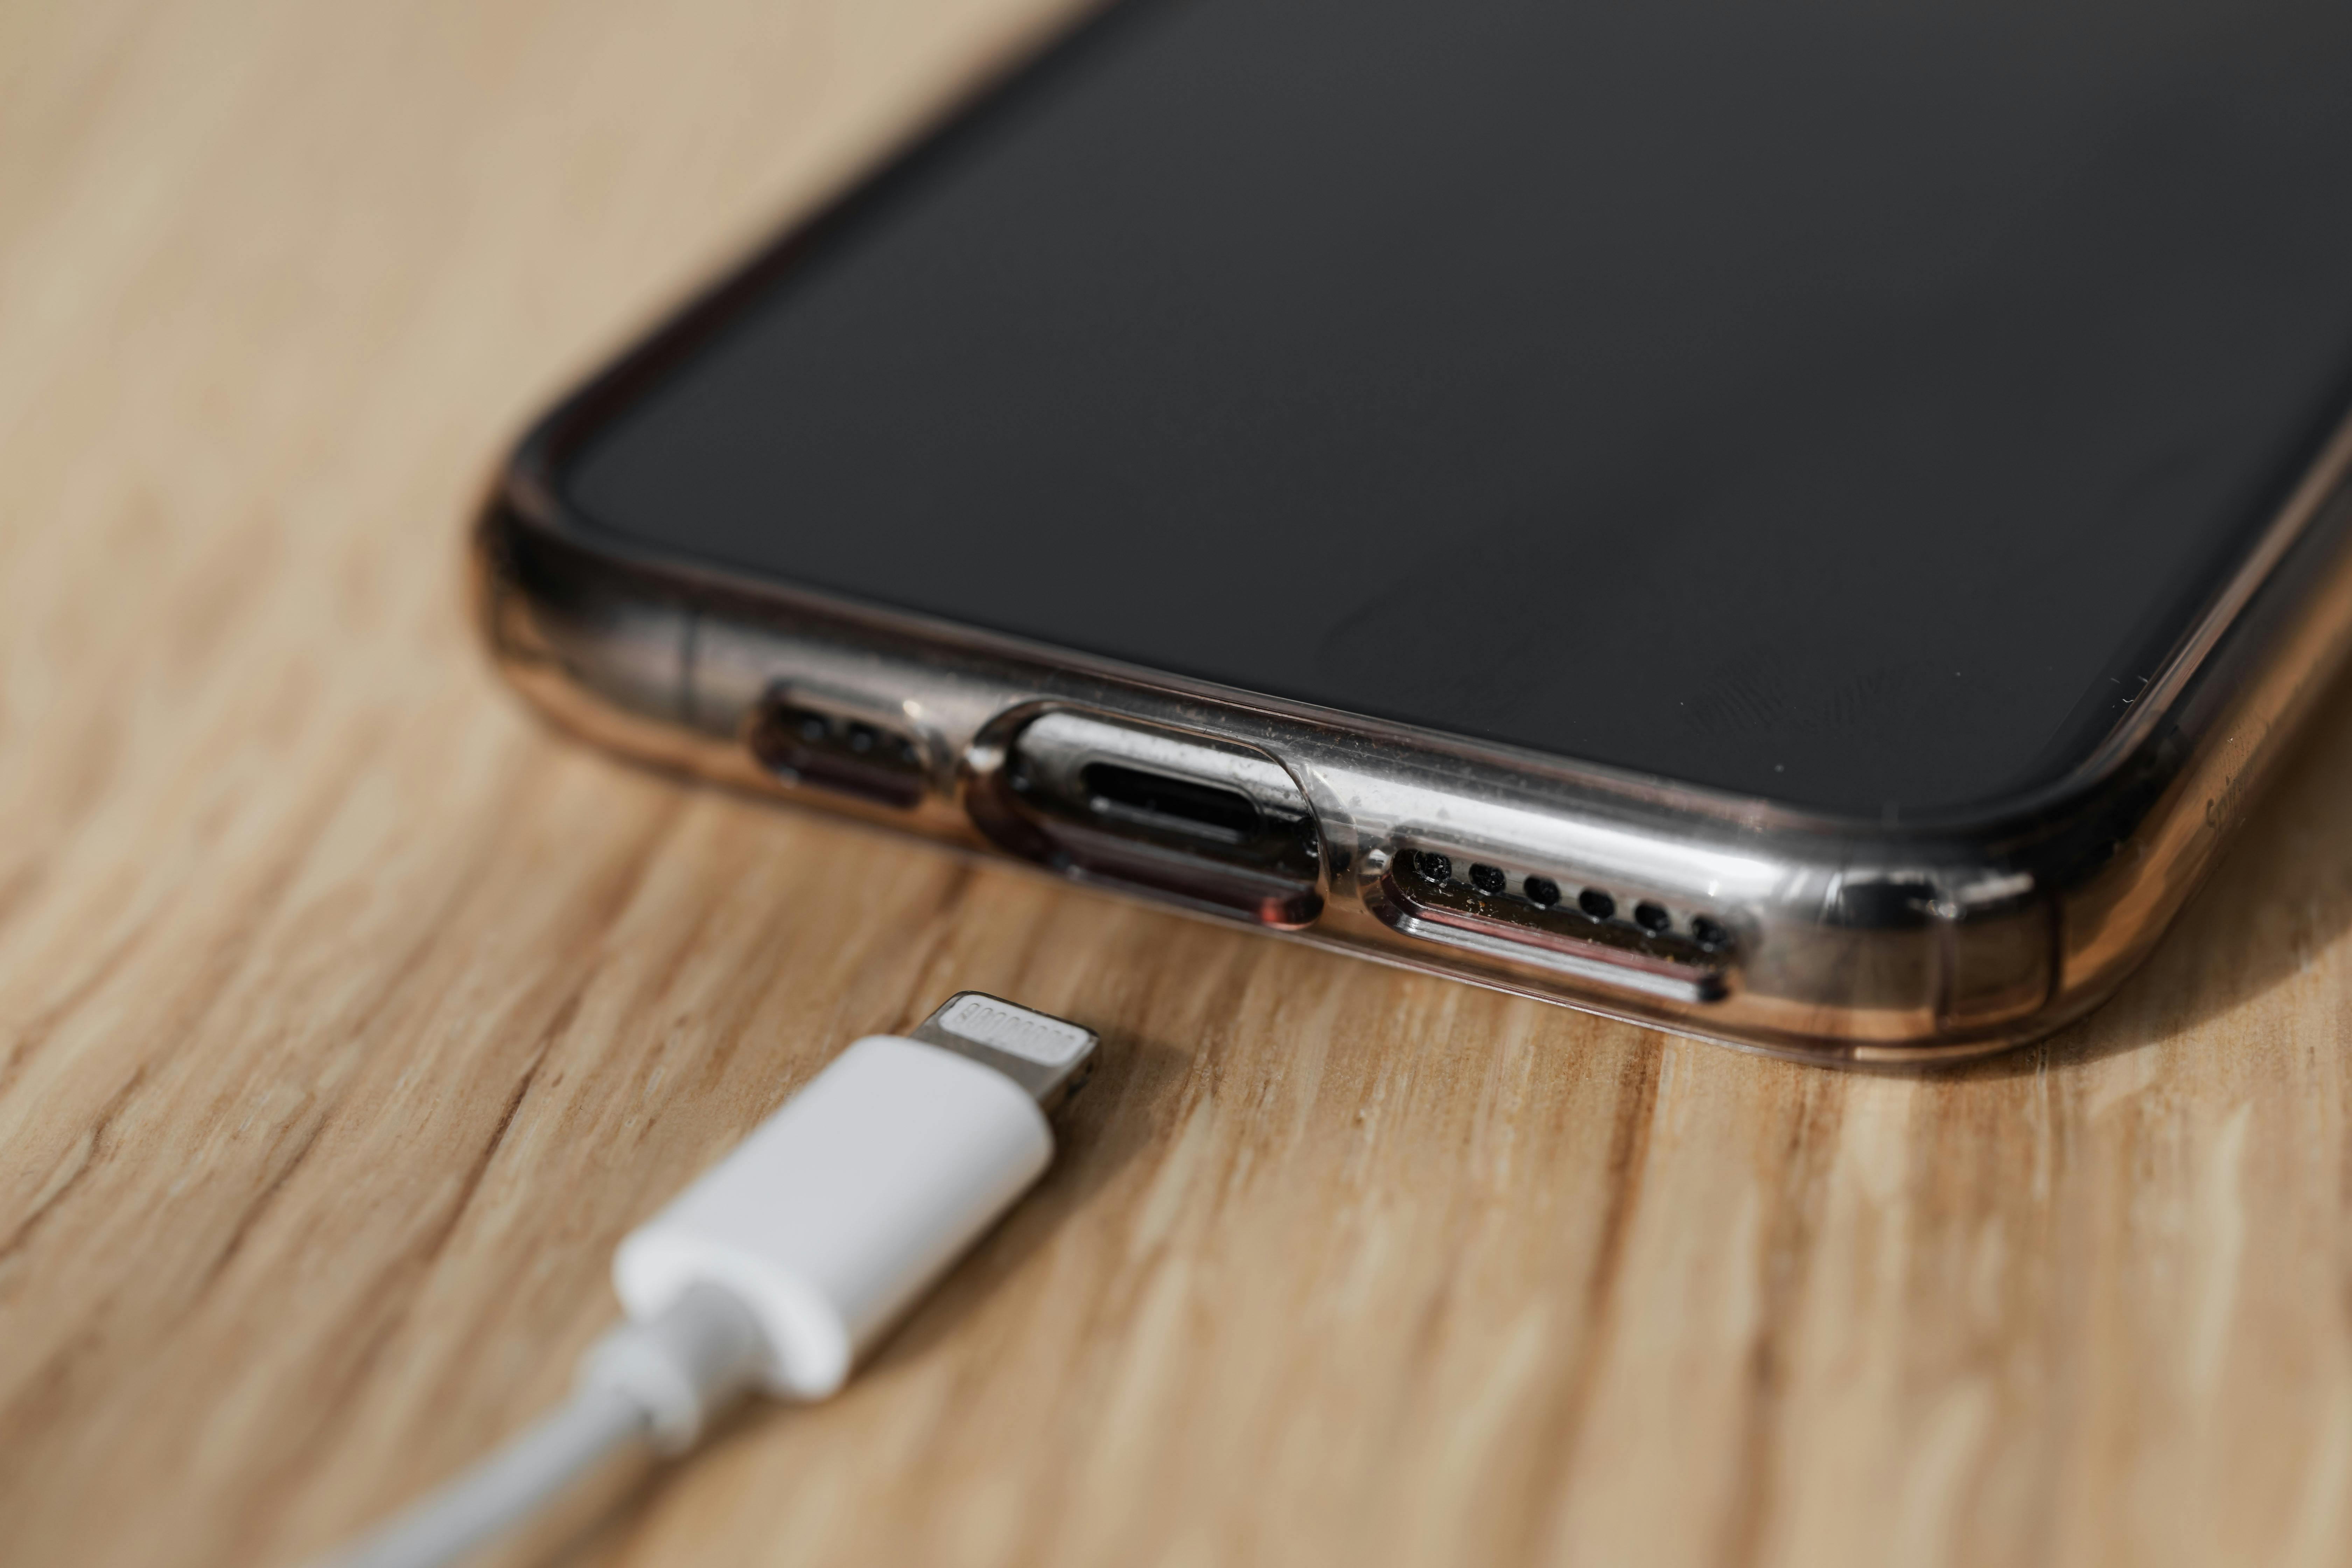 Apple Peringatkan Pengguna untuk Mengecas iPhone dengan Benar, Simak Panduannya!